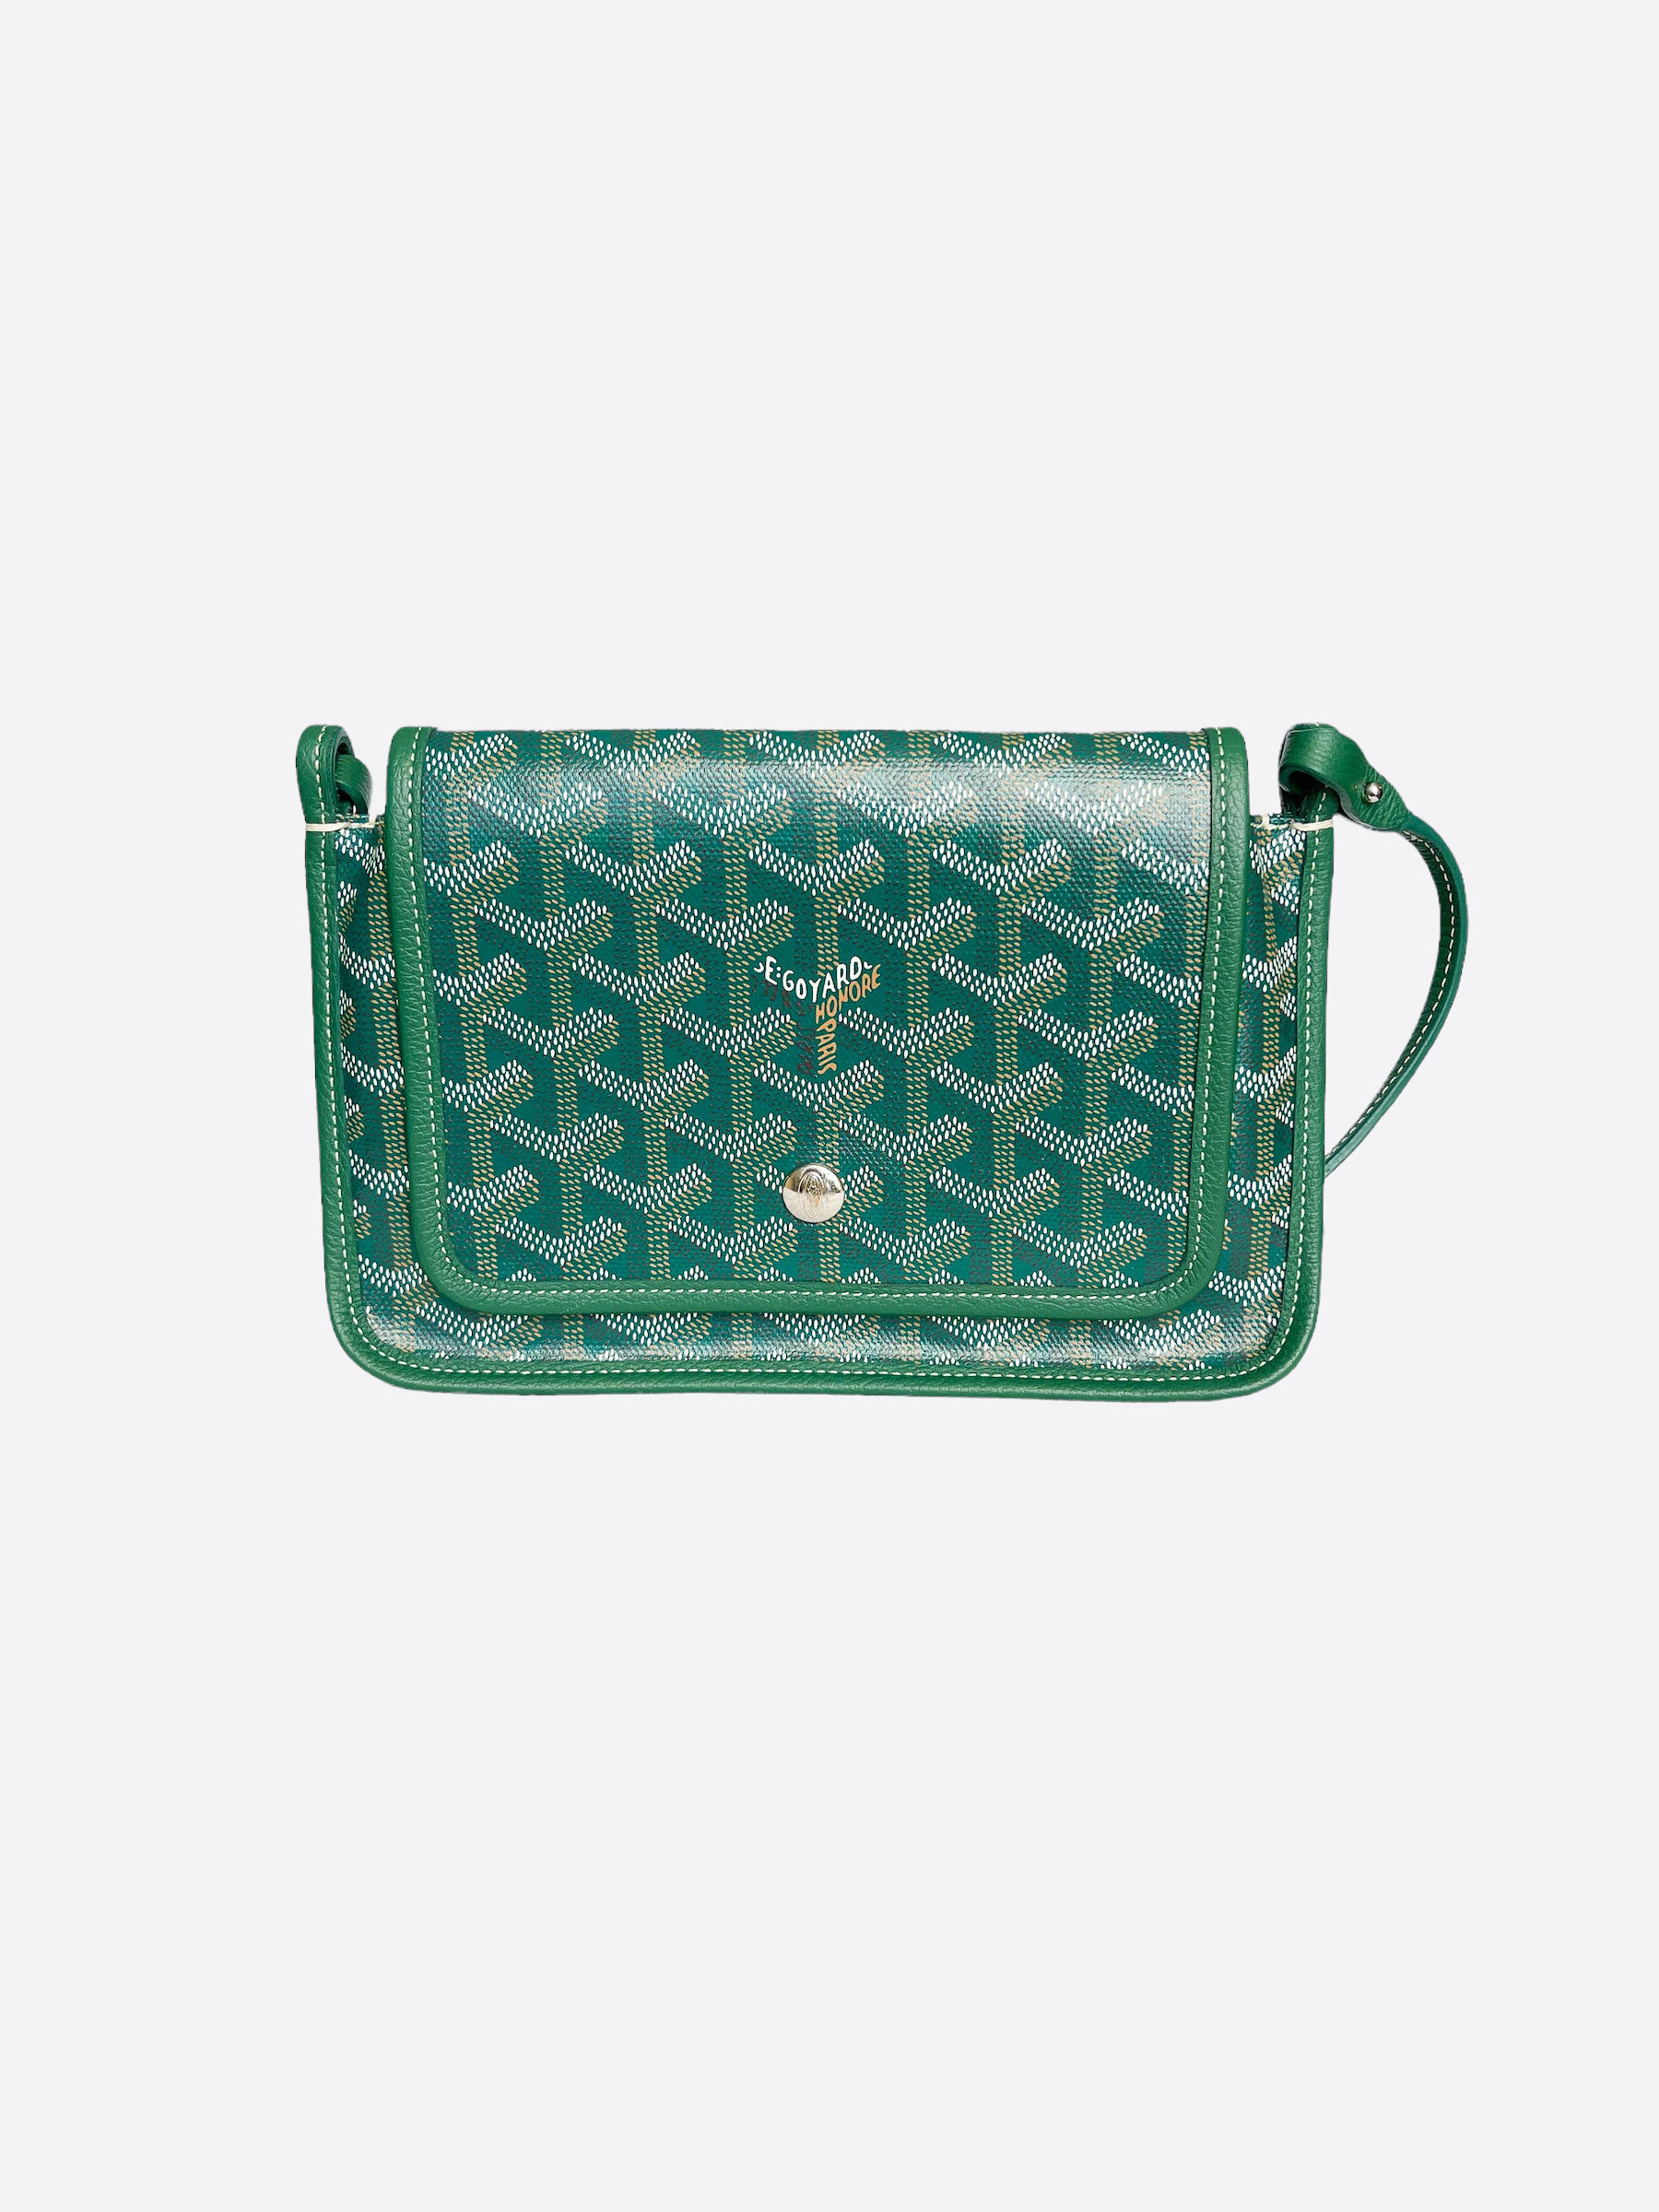 GOYARD Plumet Crossbody Wallet Bag Pouch Green Shoulder Purse Pochette Auth  New